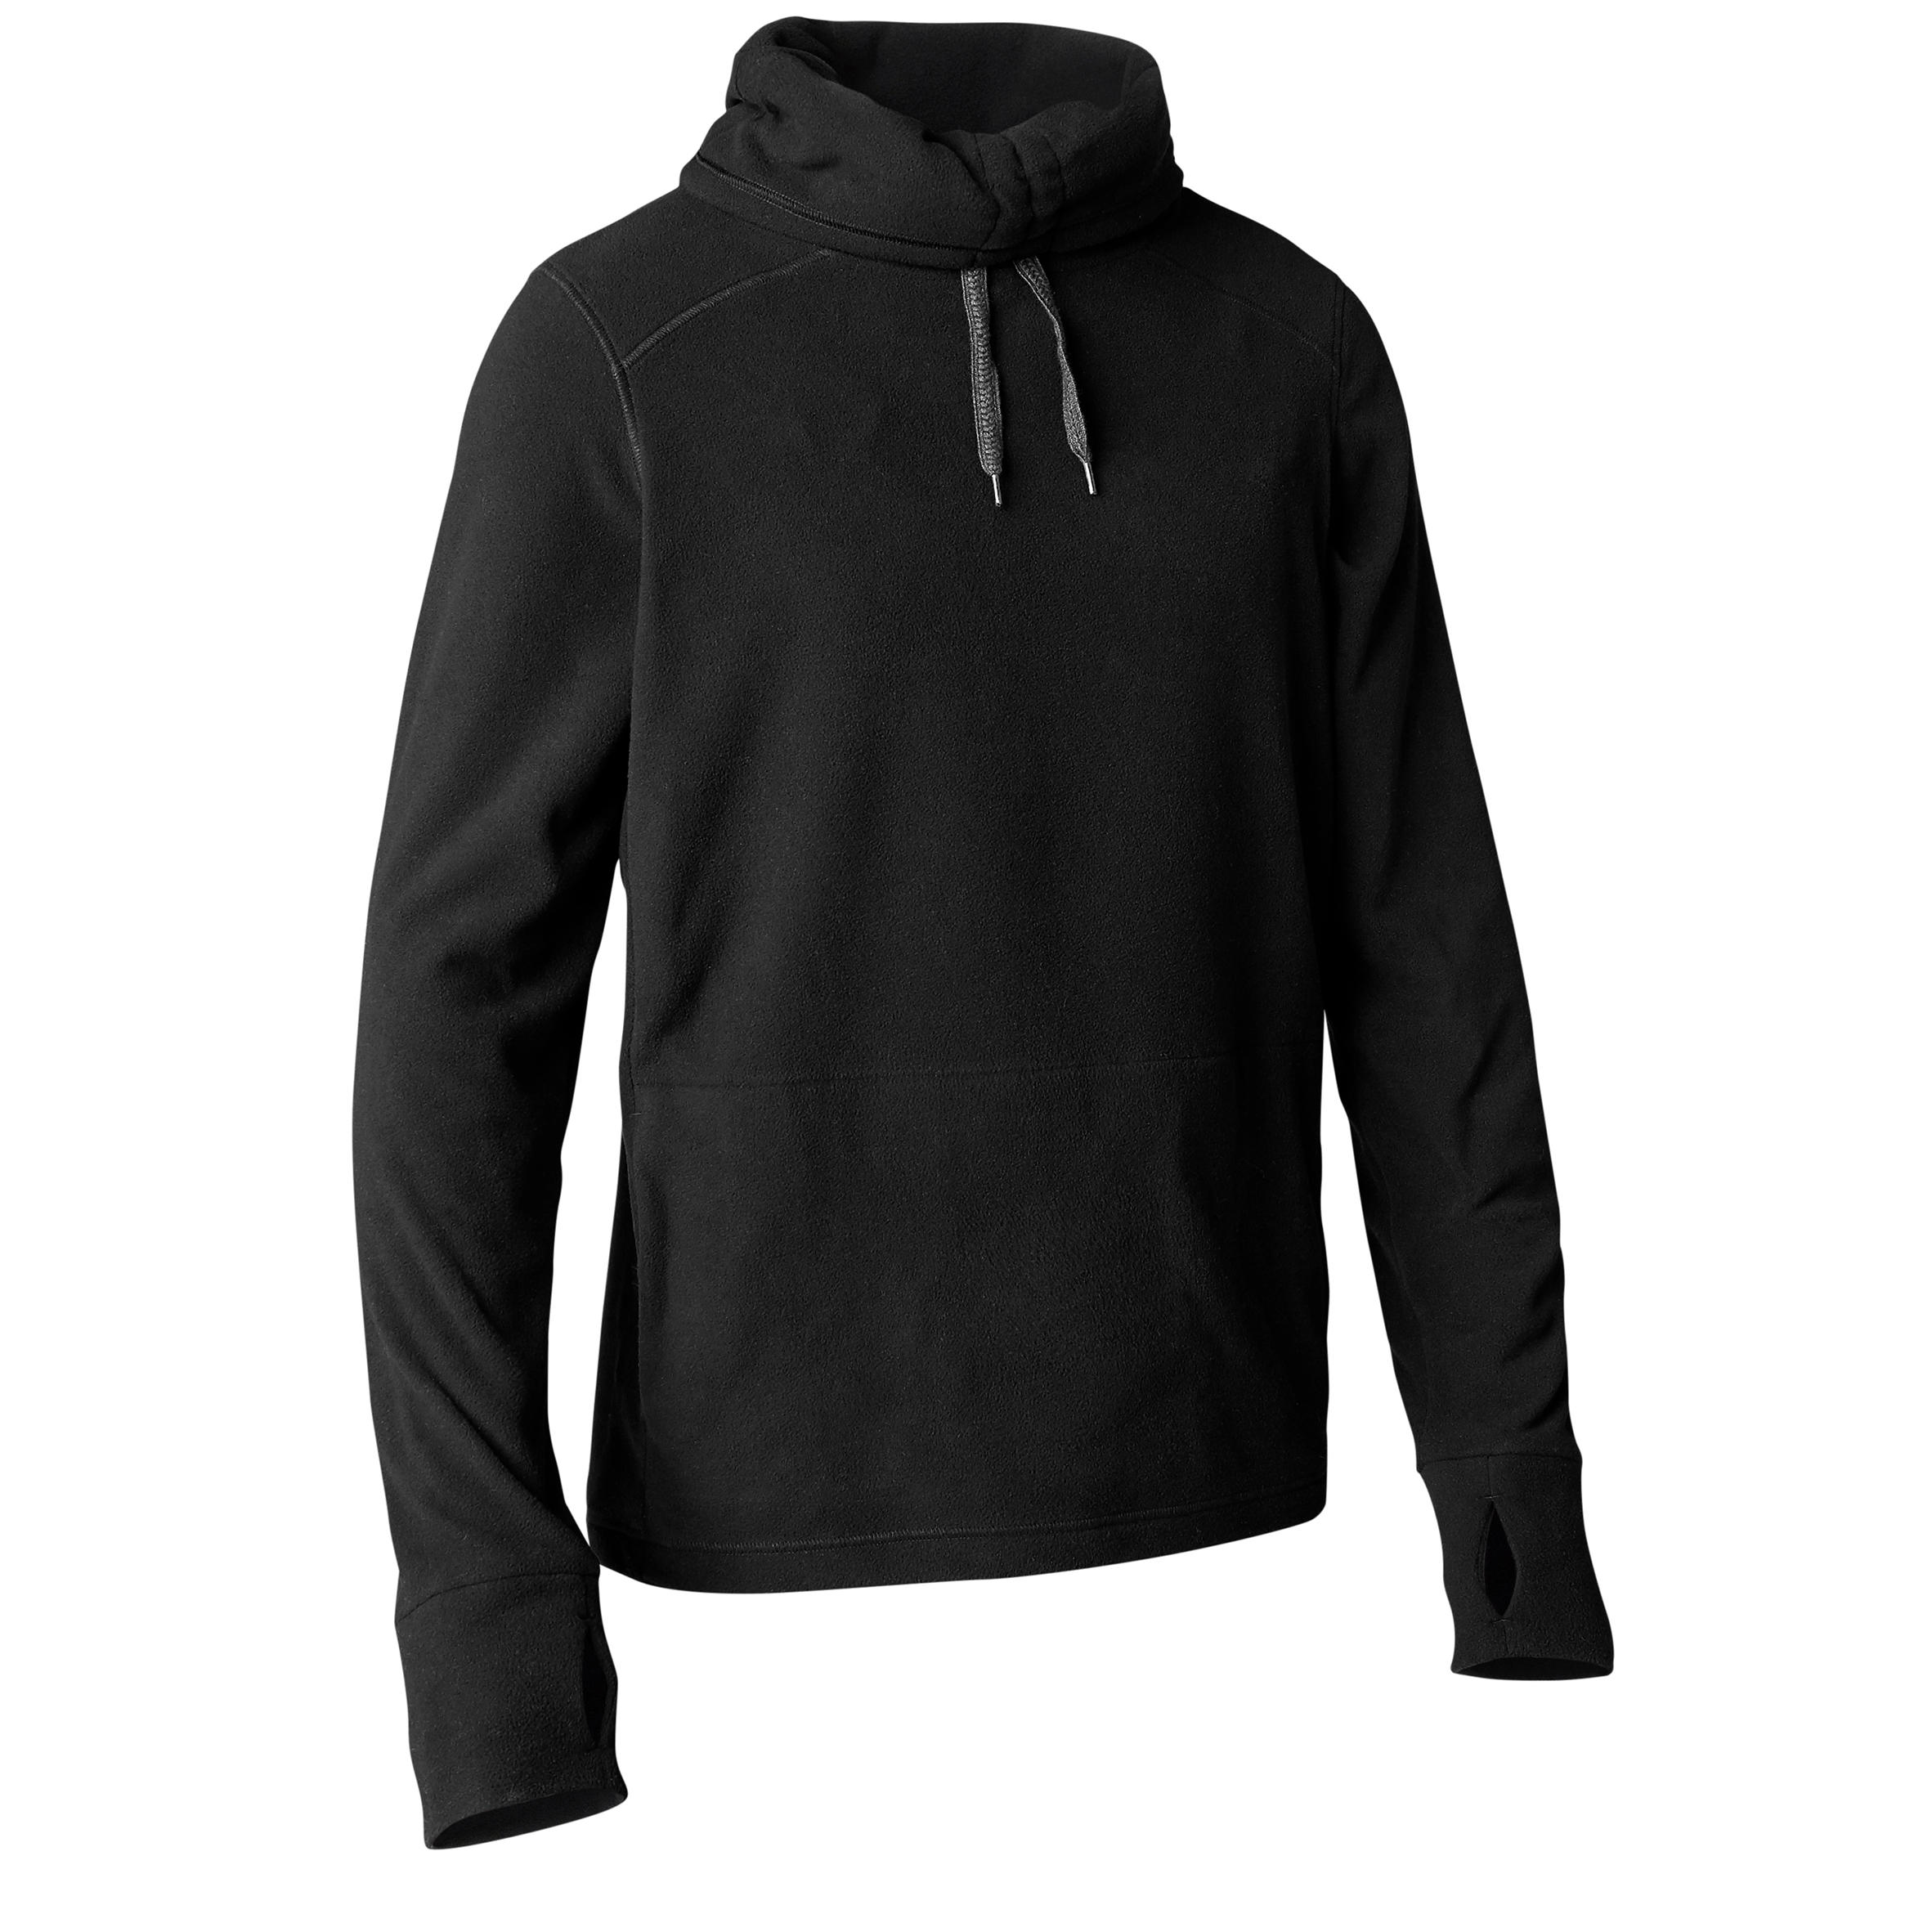 Men's Fleece Yoga Sweatshirt - Black 2/8